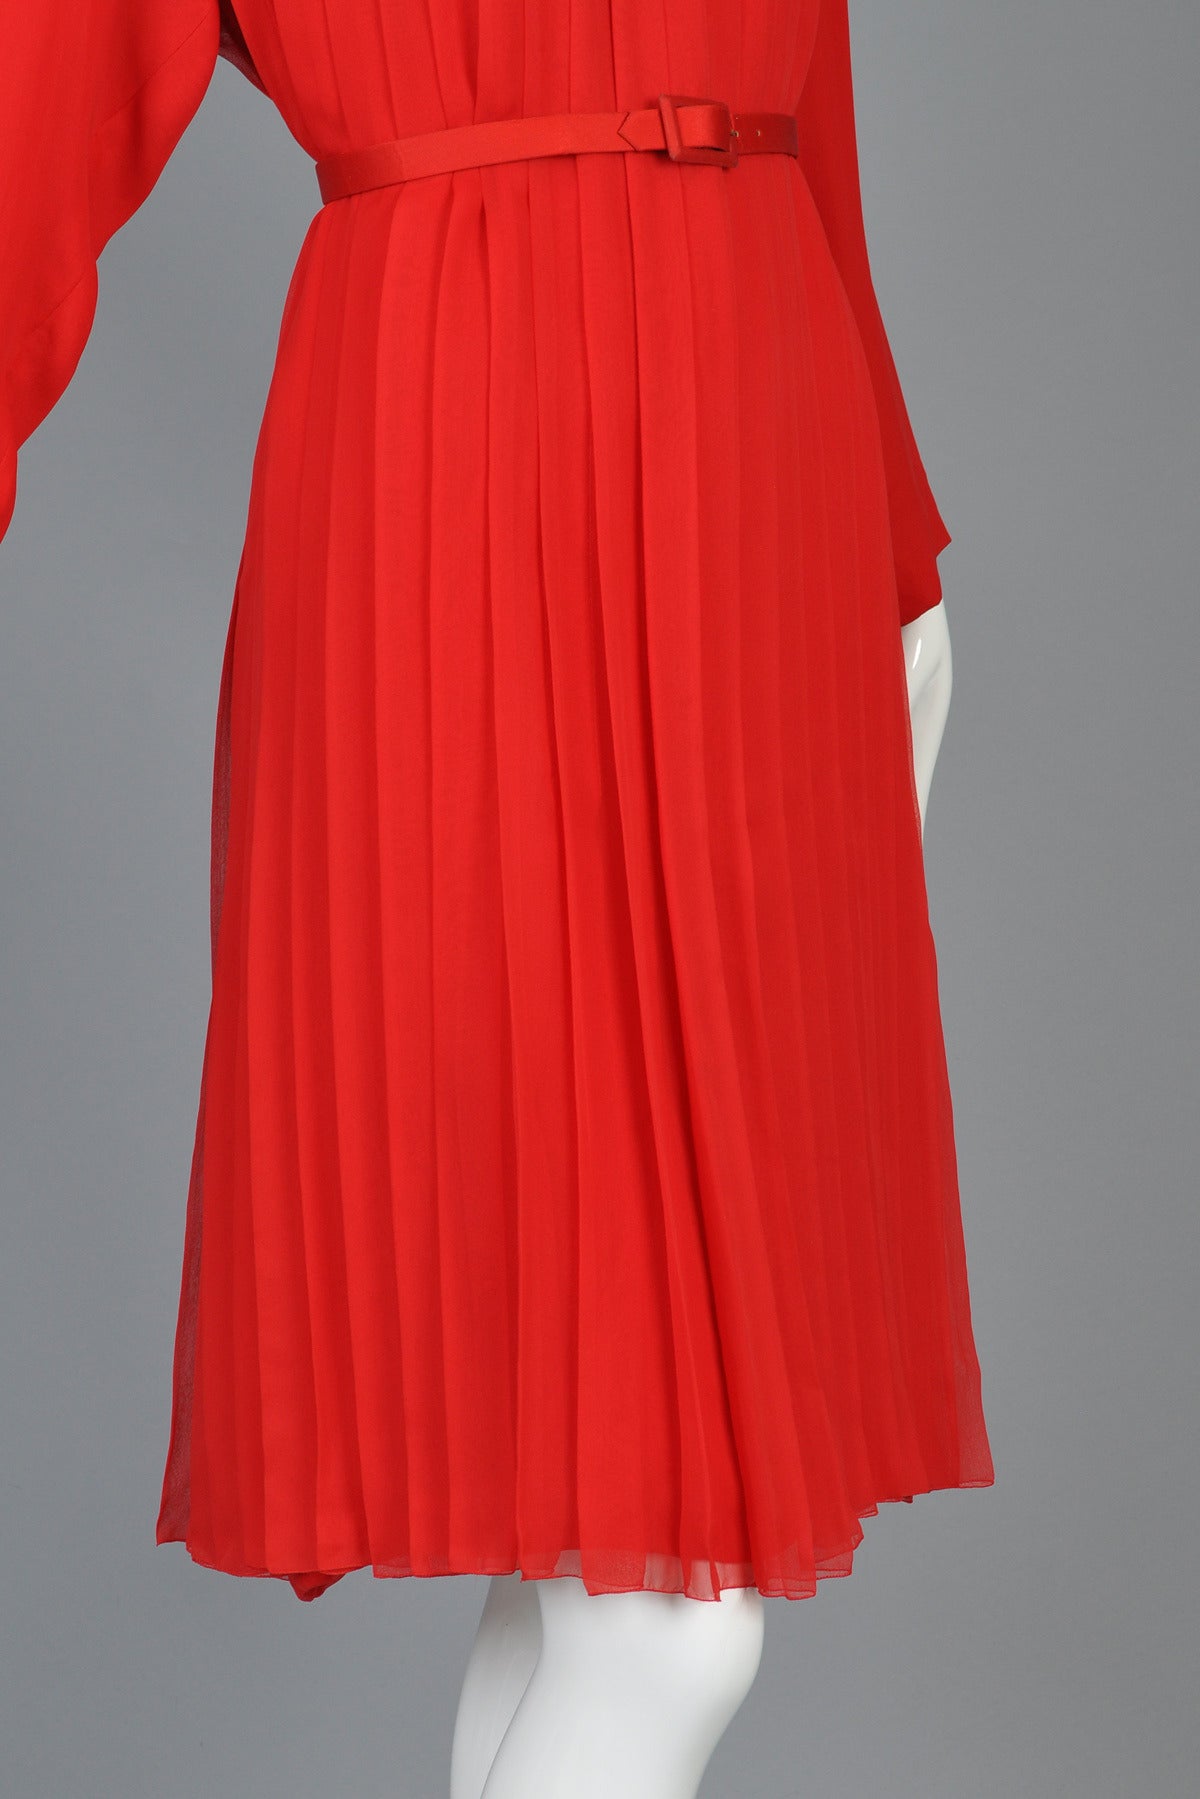 Women's Galanos Ruby Red Pleated Silk Dress